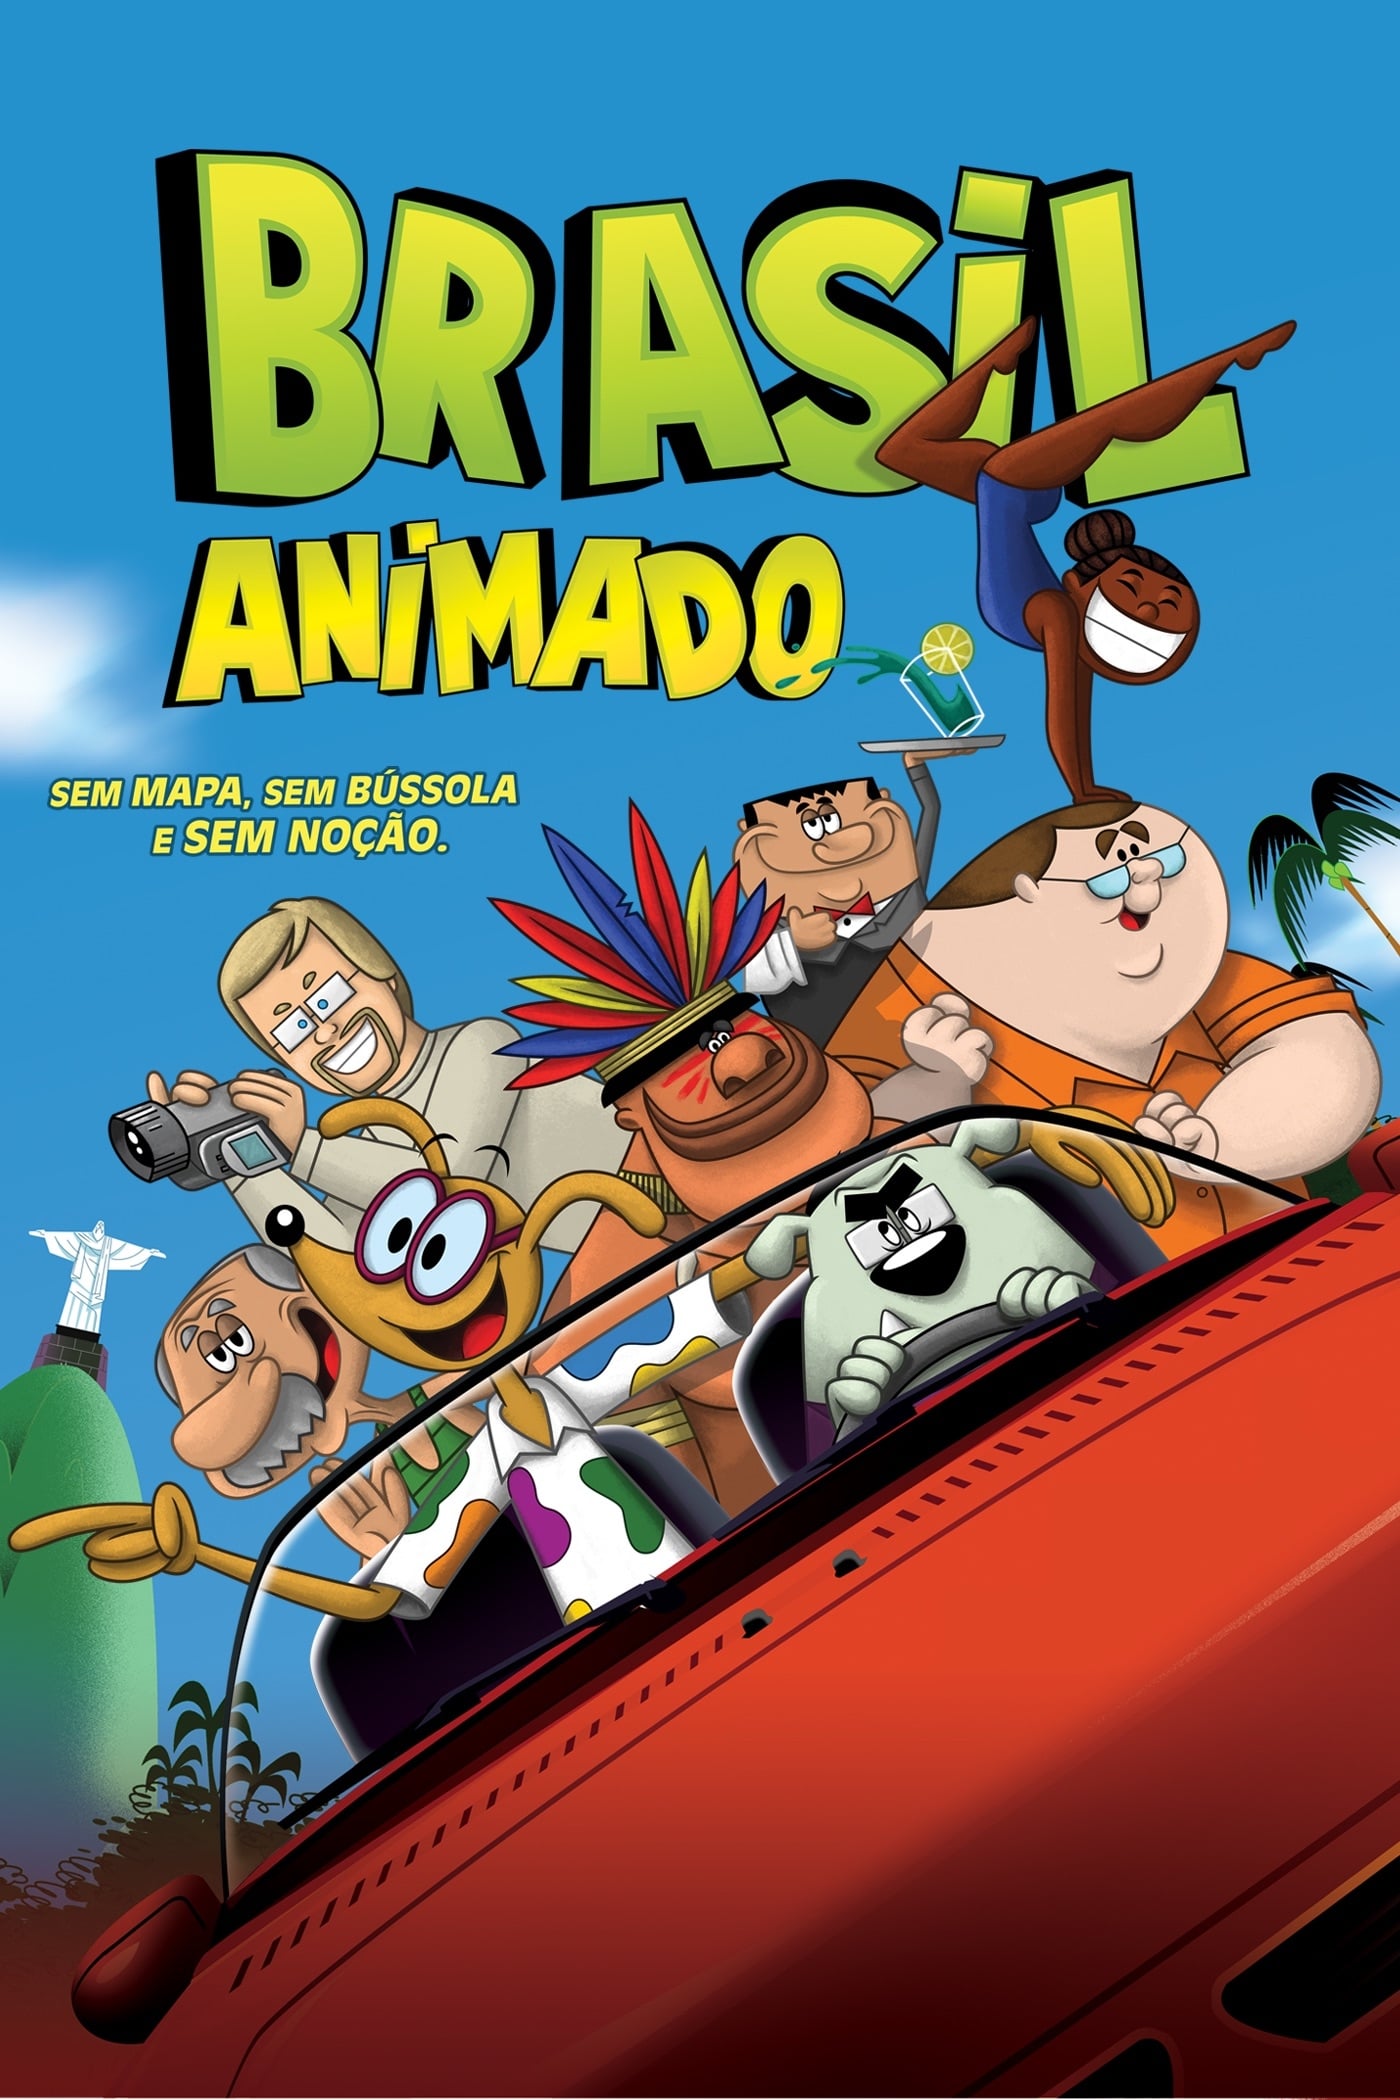 Banner Phim Animado Chu Du Thế Giới (Brasil Animado)